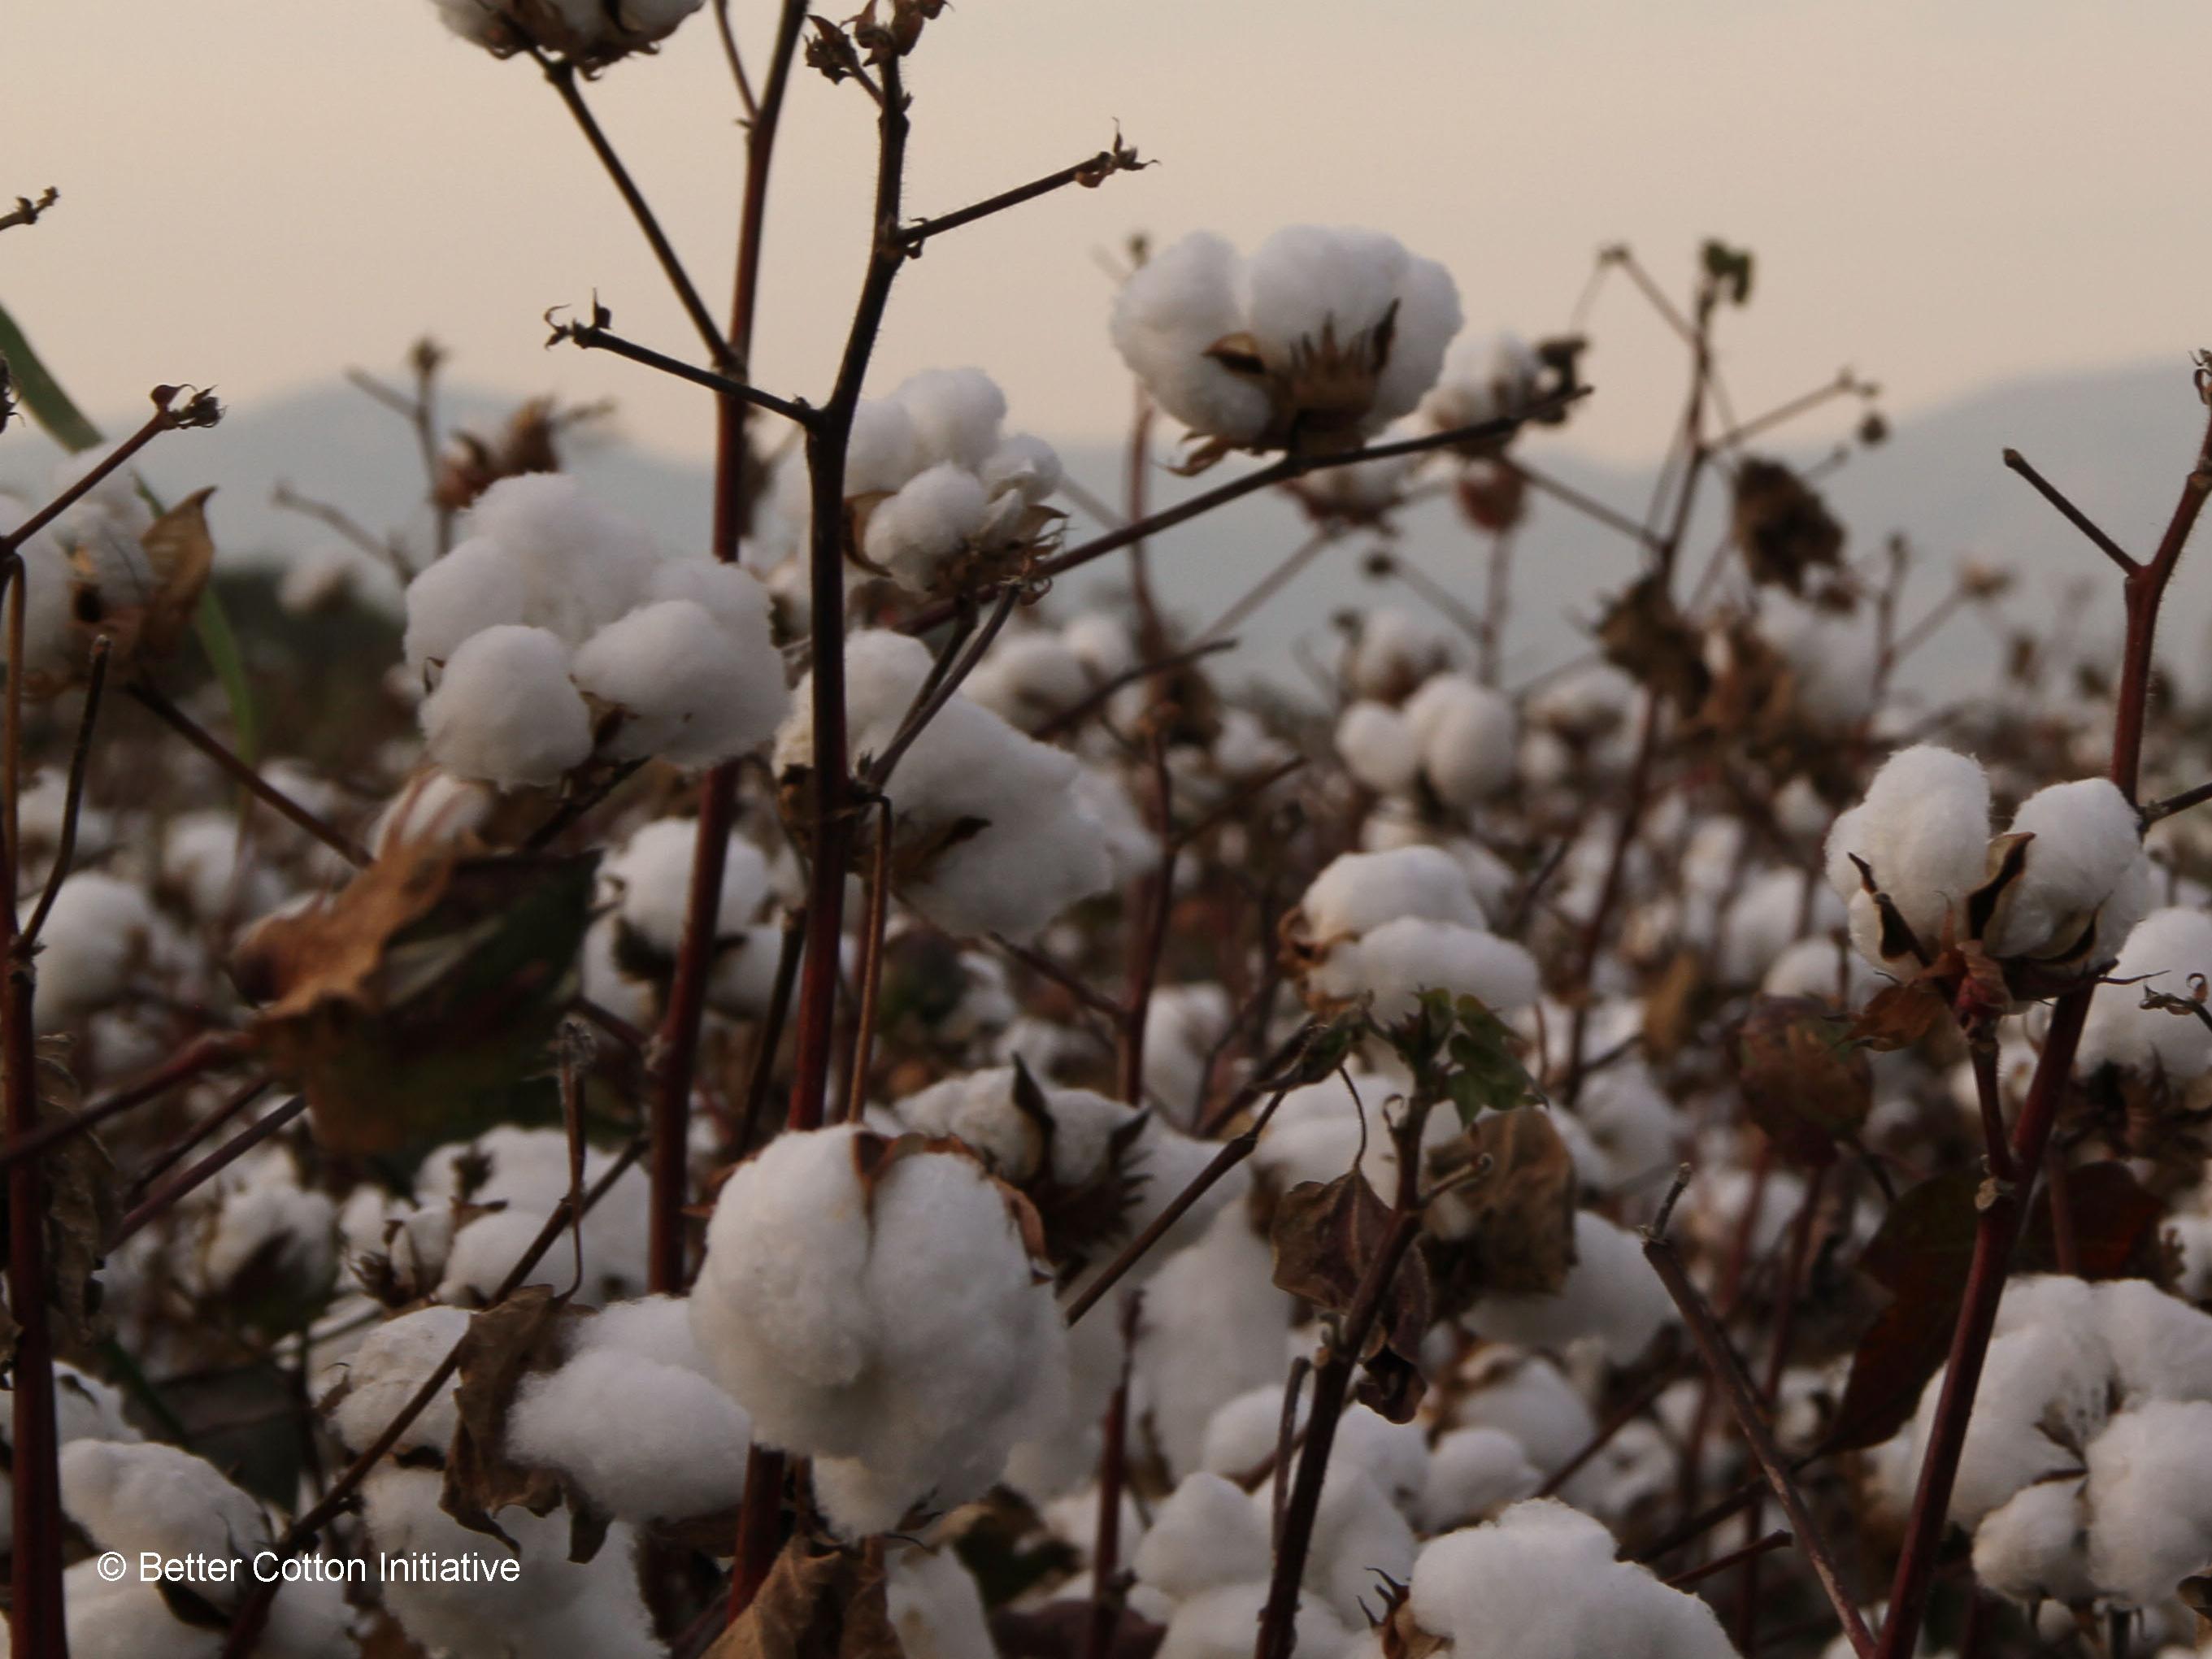 Cotton field at sunset © Better Cotton Initiative